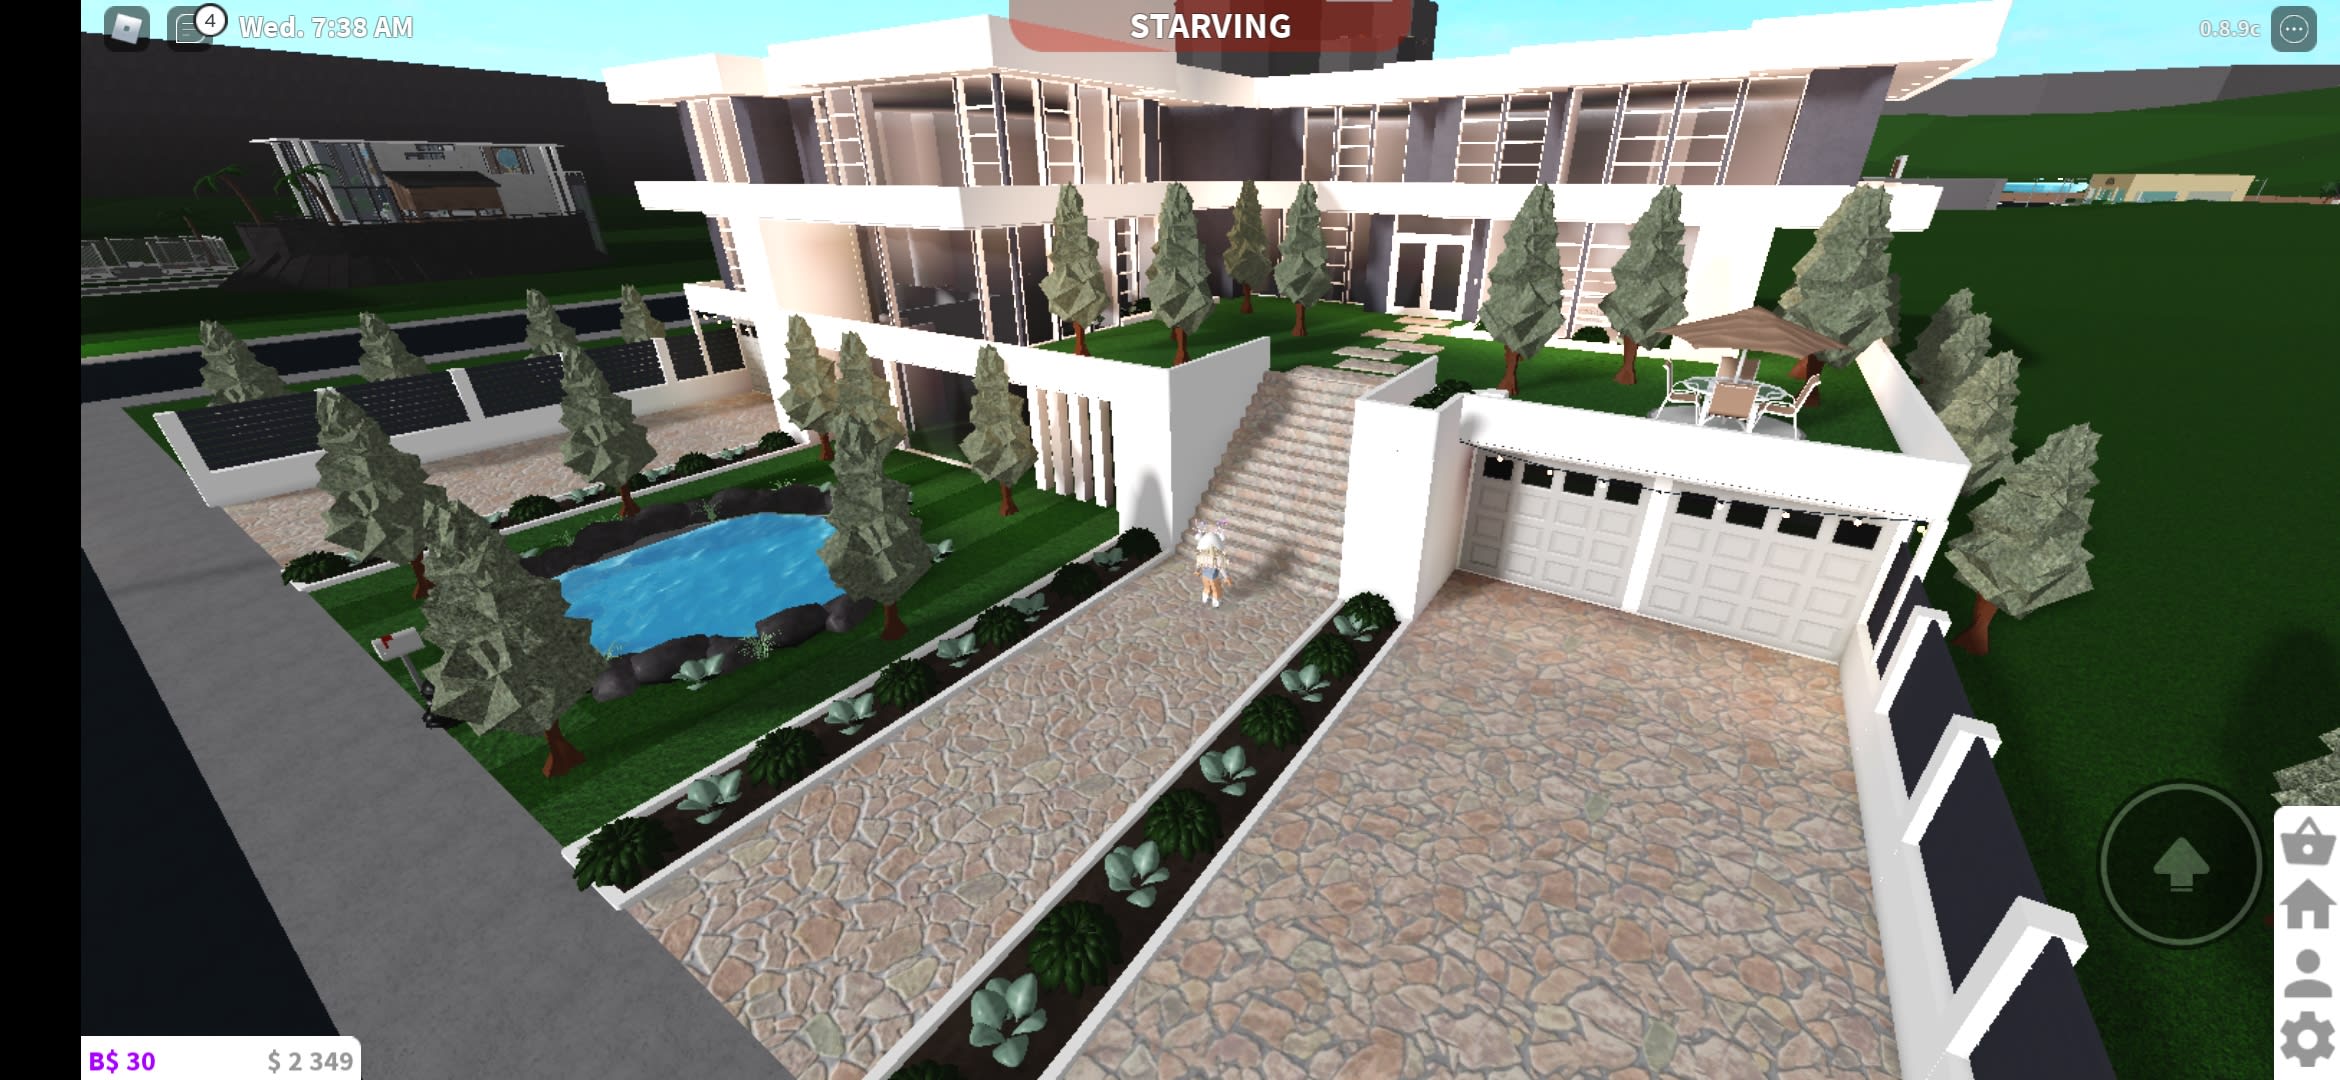 Build Any Type Of House In Bloxburg By Scarlett Playz - roblox bloxburg houses 38